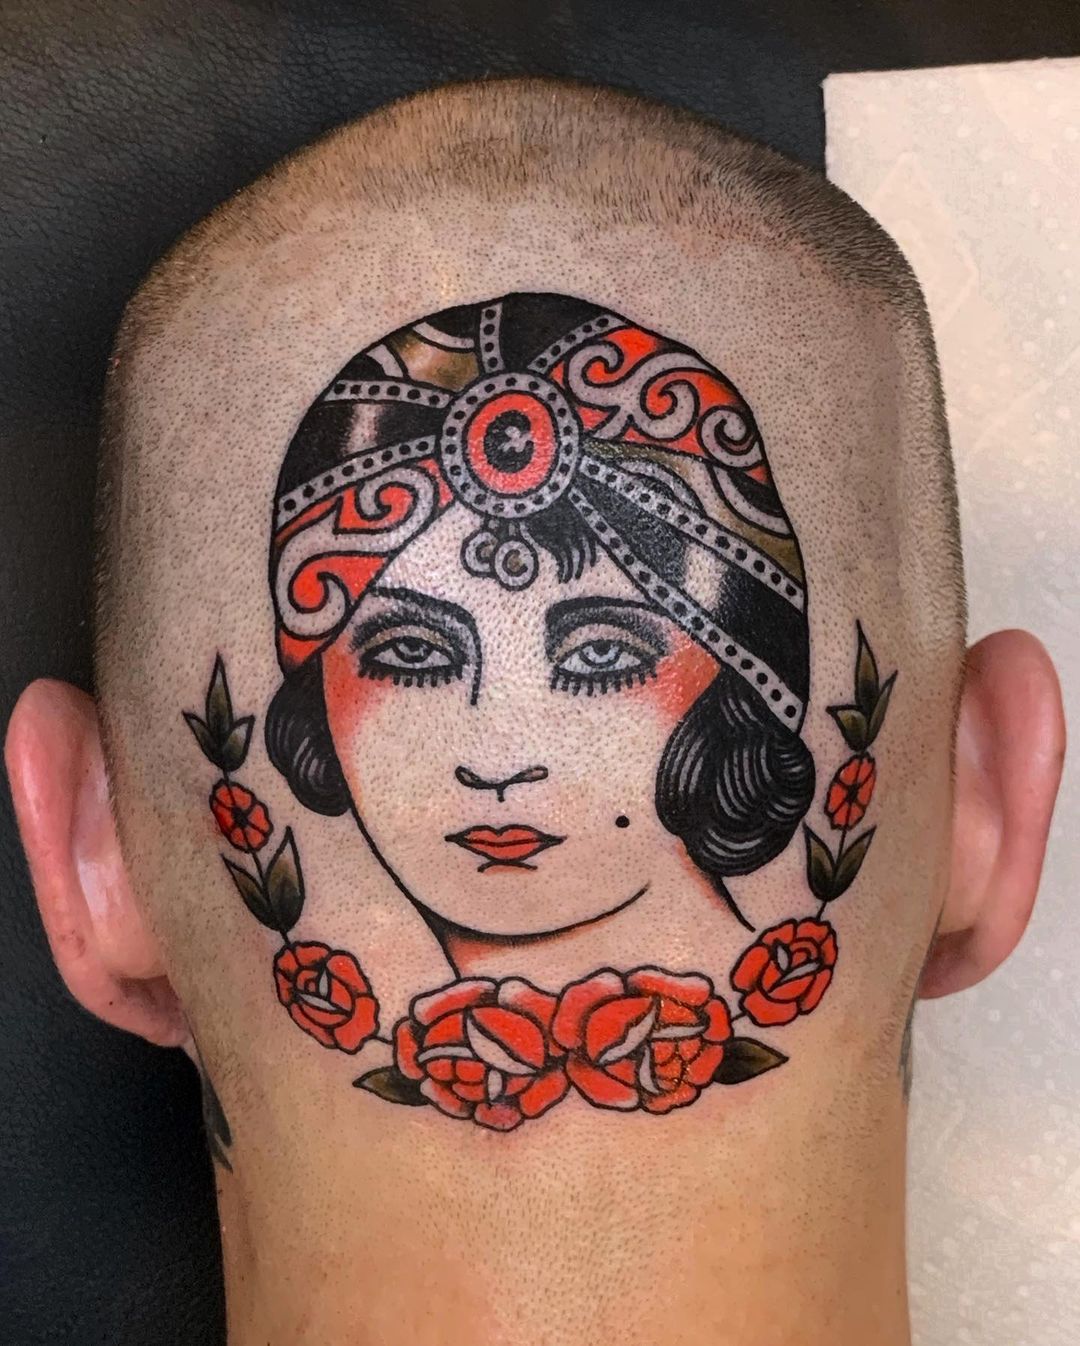 Gypsy-woman-head-tattoo | www.facebook.com/FlamingArtTattoo/… | Flickr